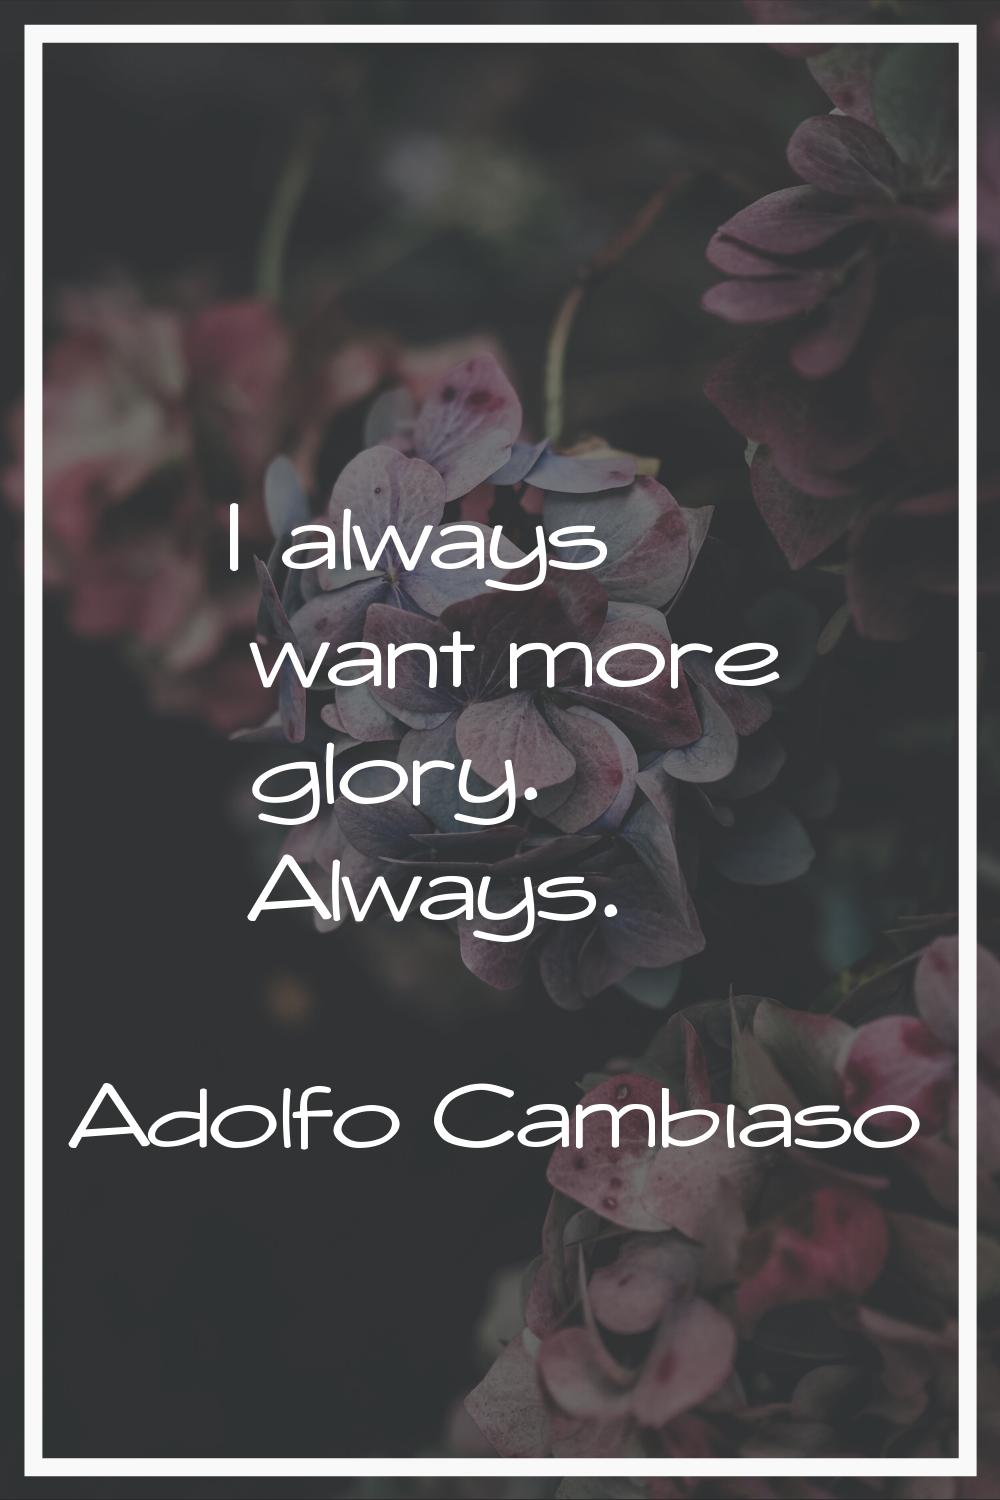 I always want more glory. Always.